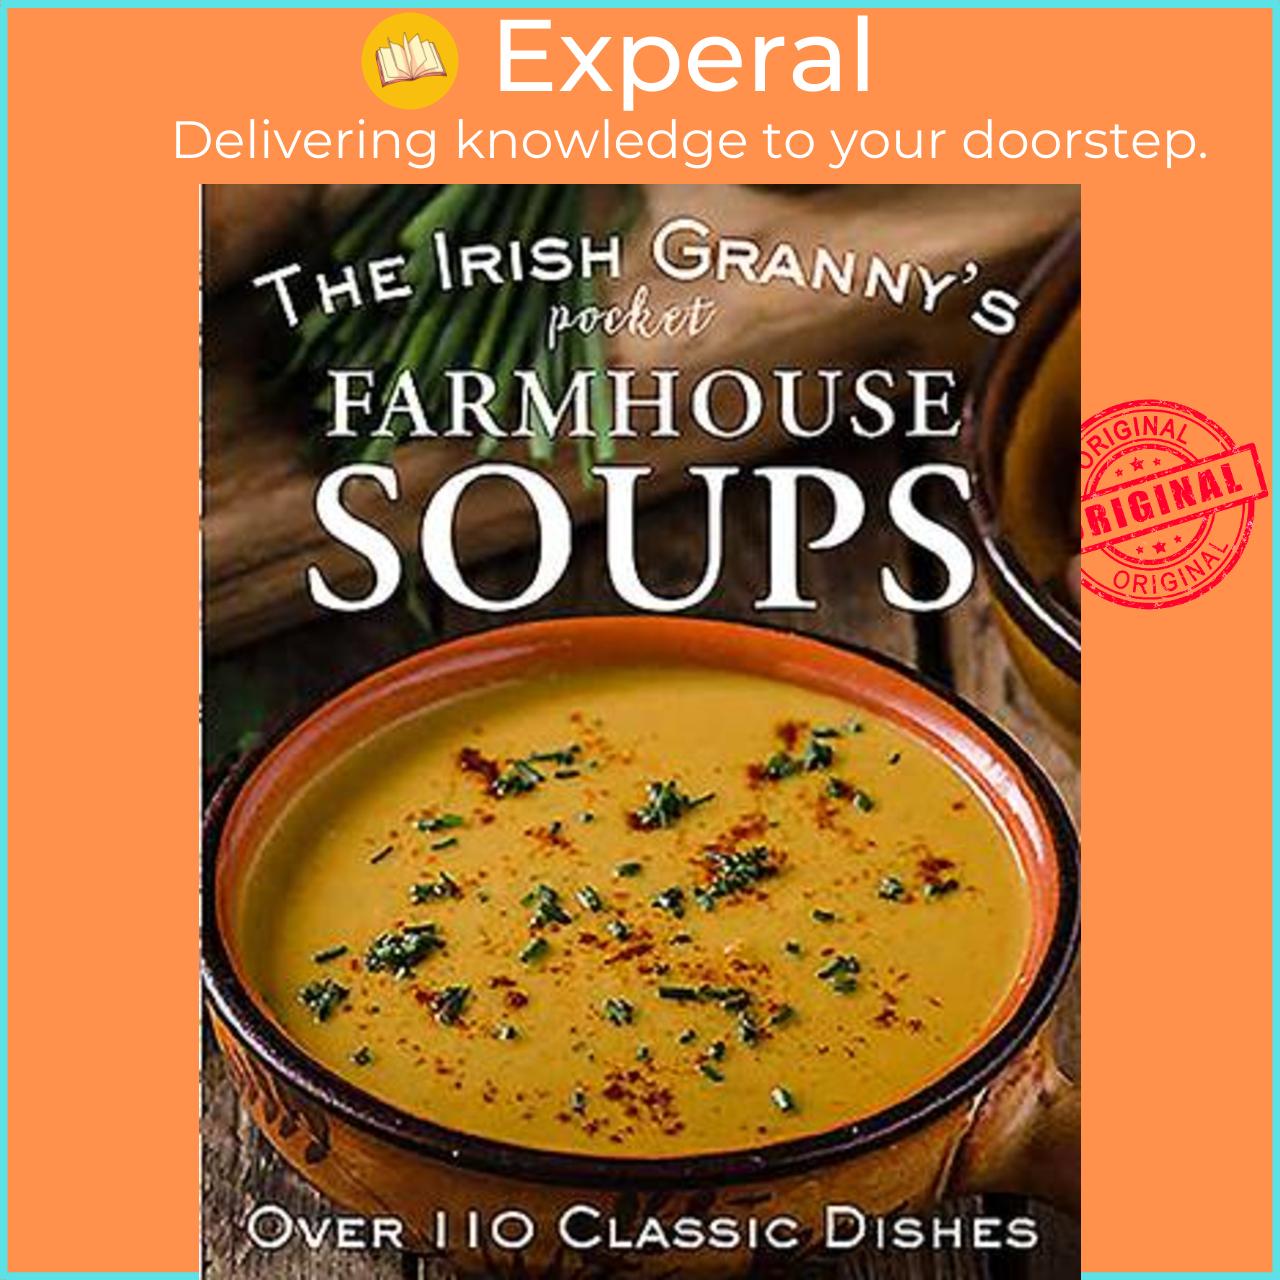 Hình ảnh Sách - The Irish Granny's Pocket Farmhouse Soups by None Gill Books (US edition, hardcover)